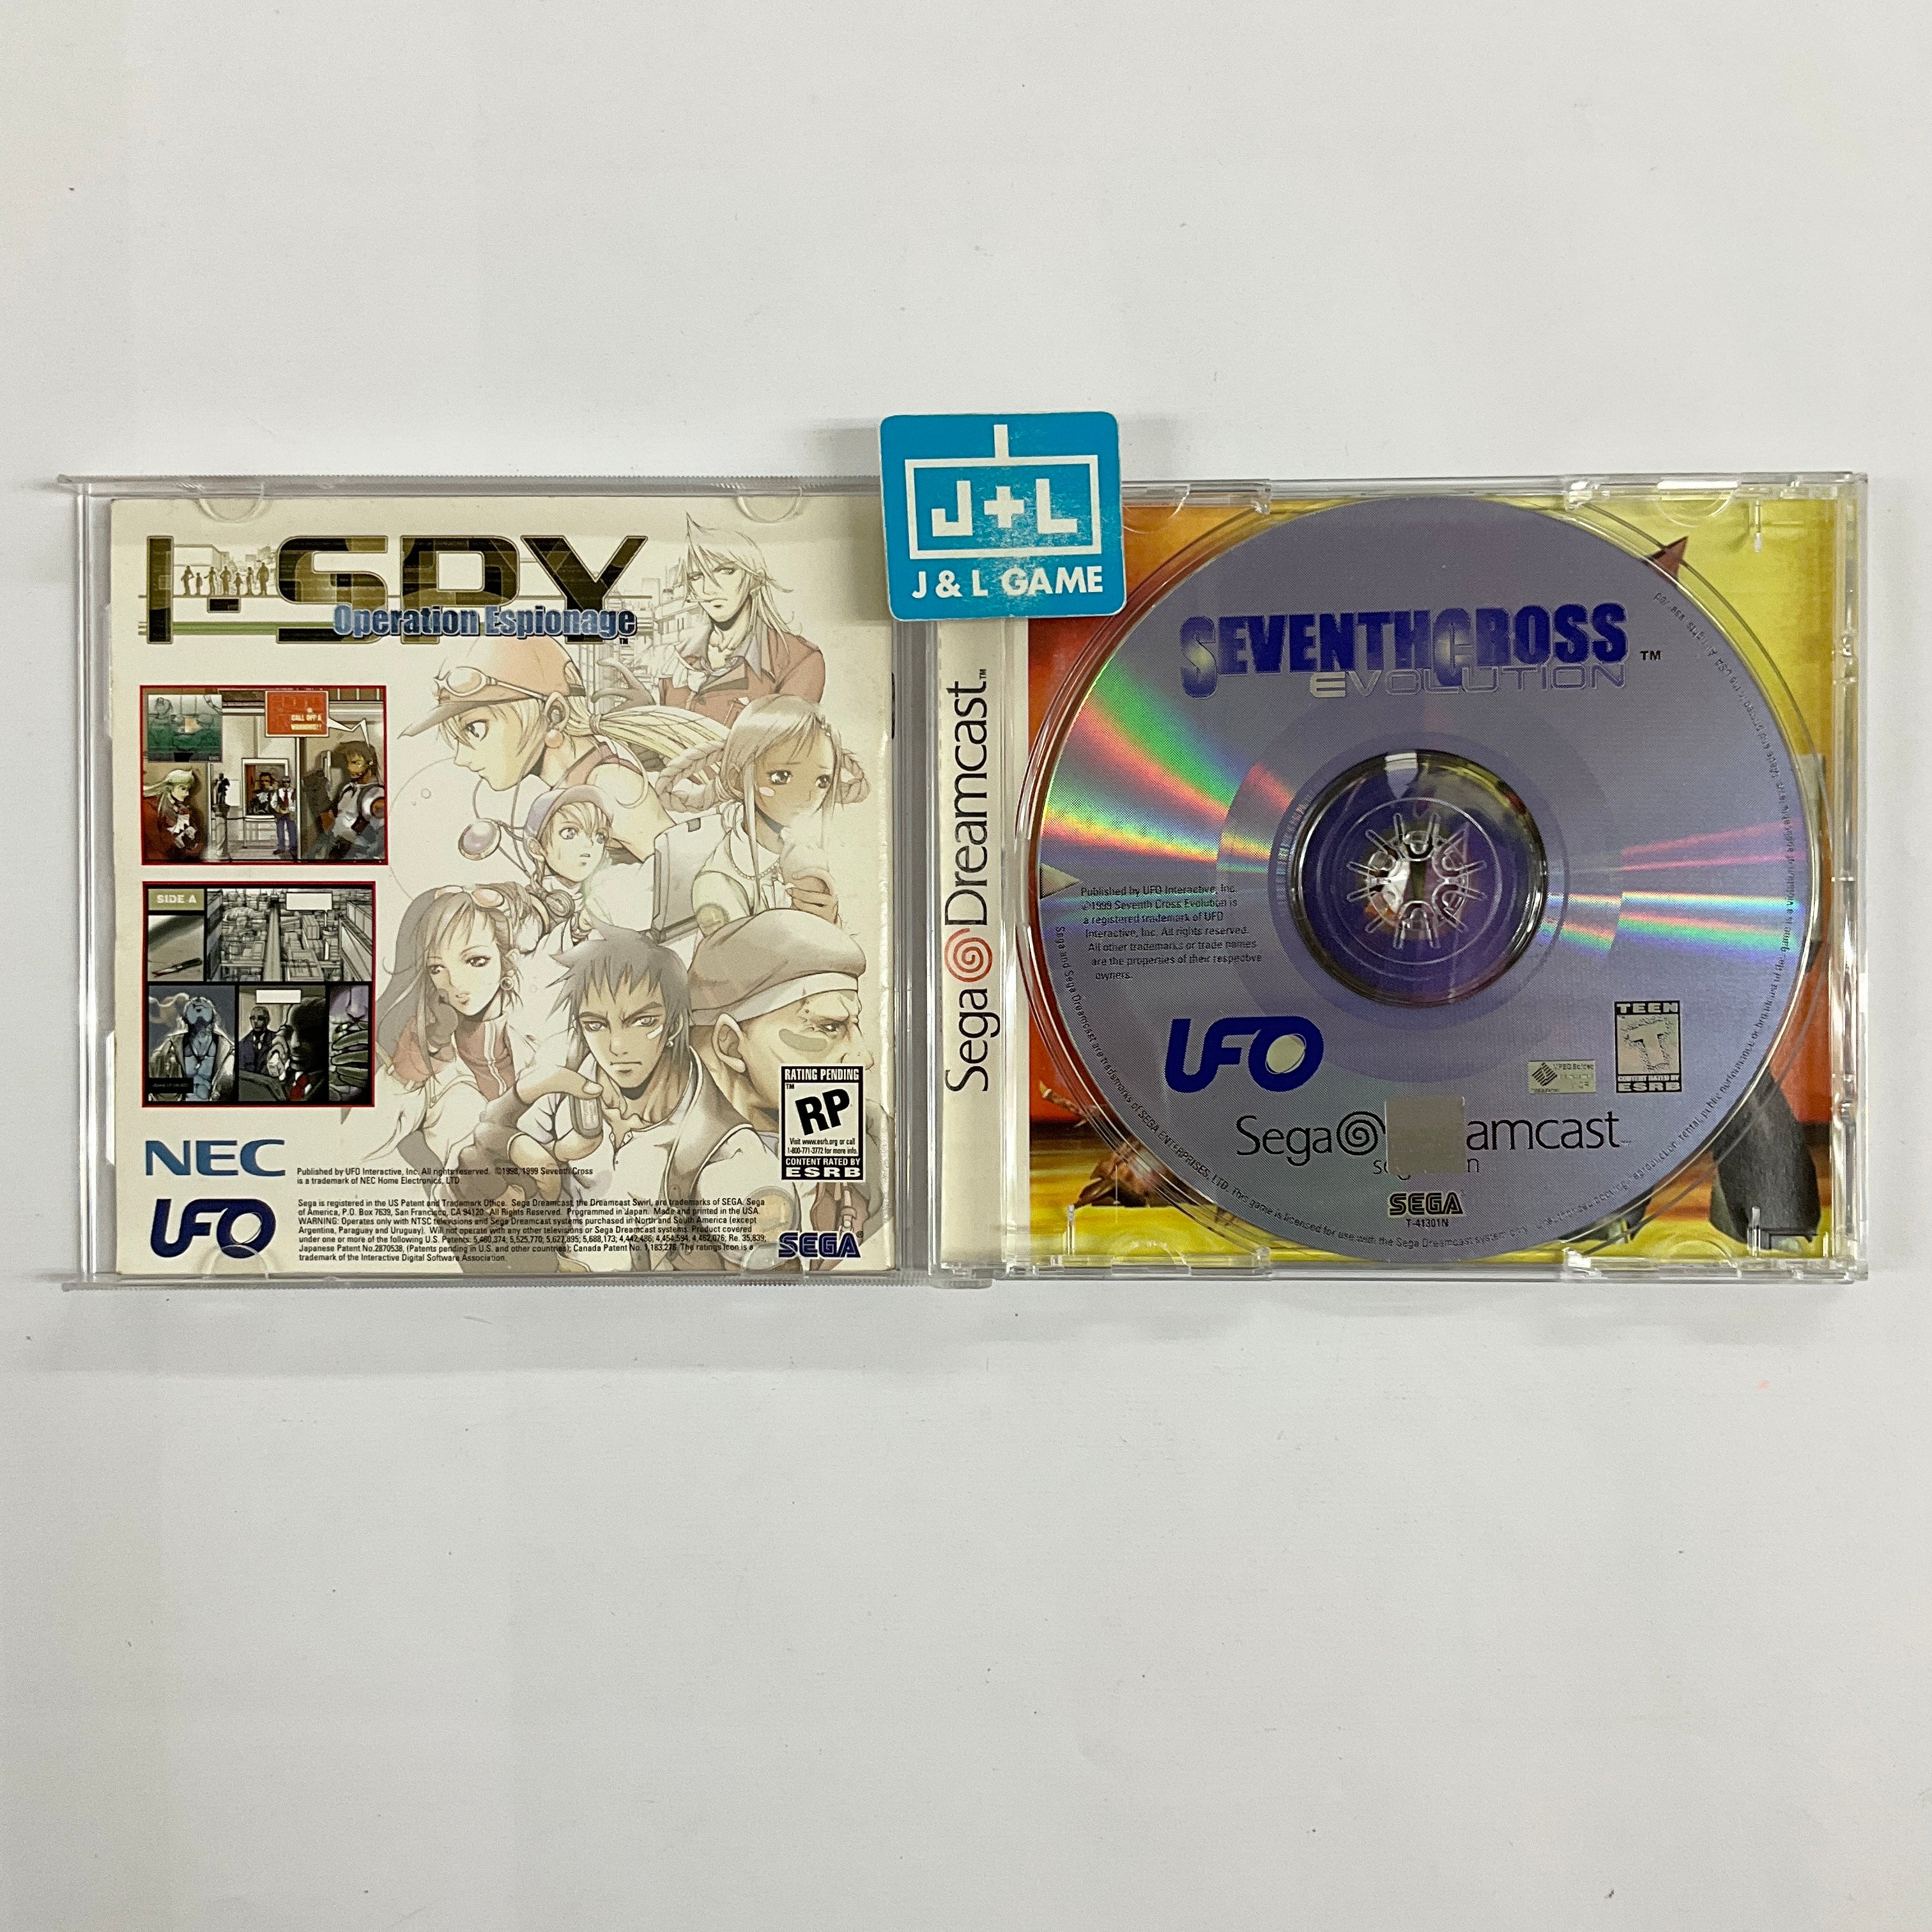 Seventh Cross Evolution - (DC) SEGA Dreamcast [Pre-Owned] Video Games UFO Interactive   